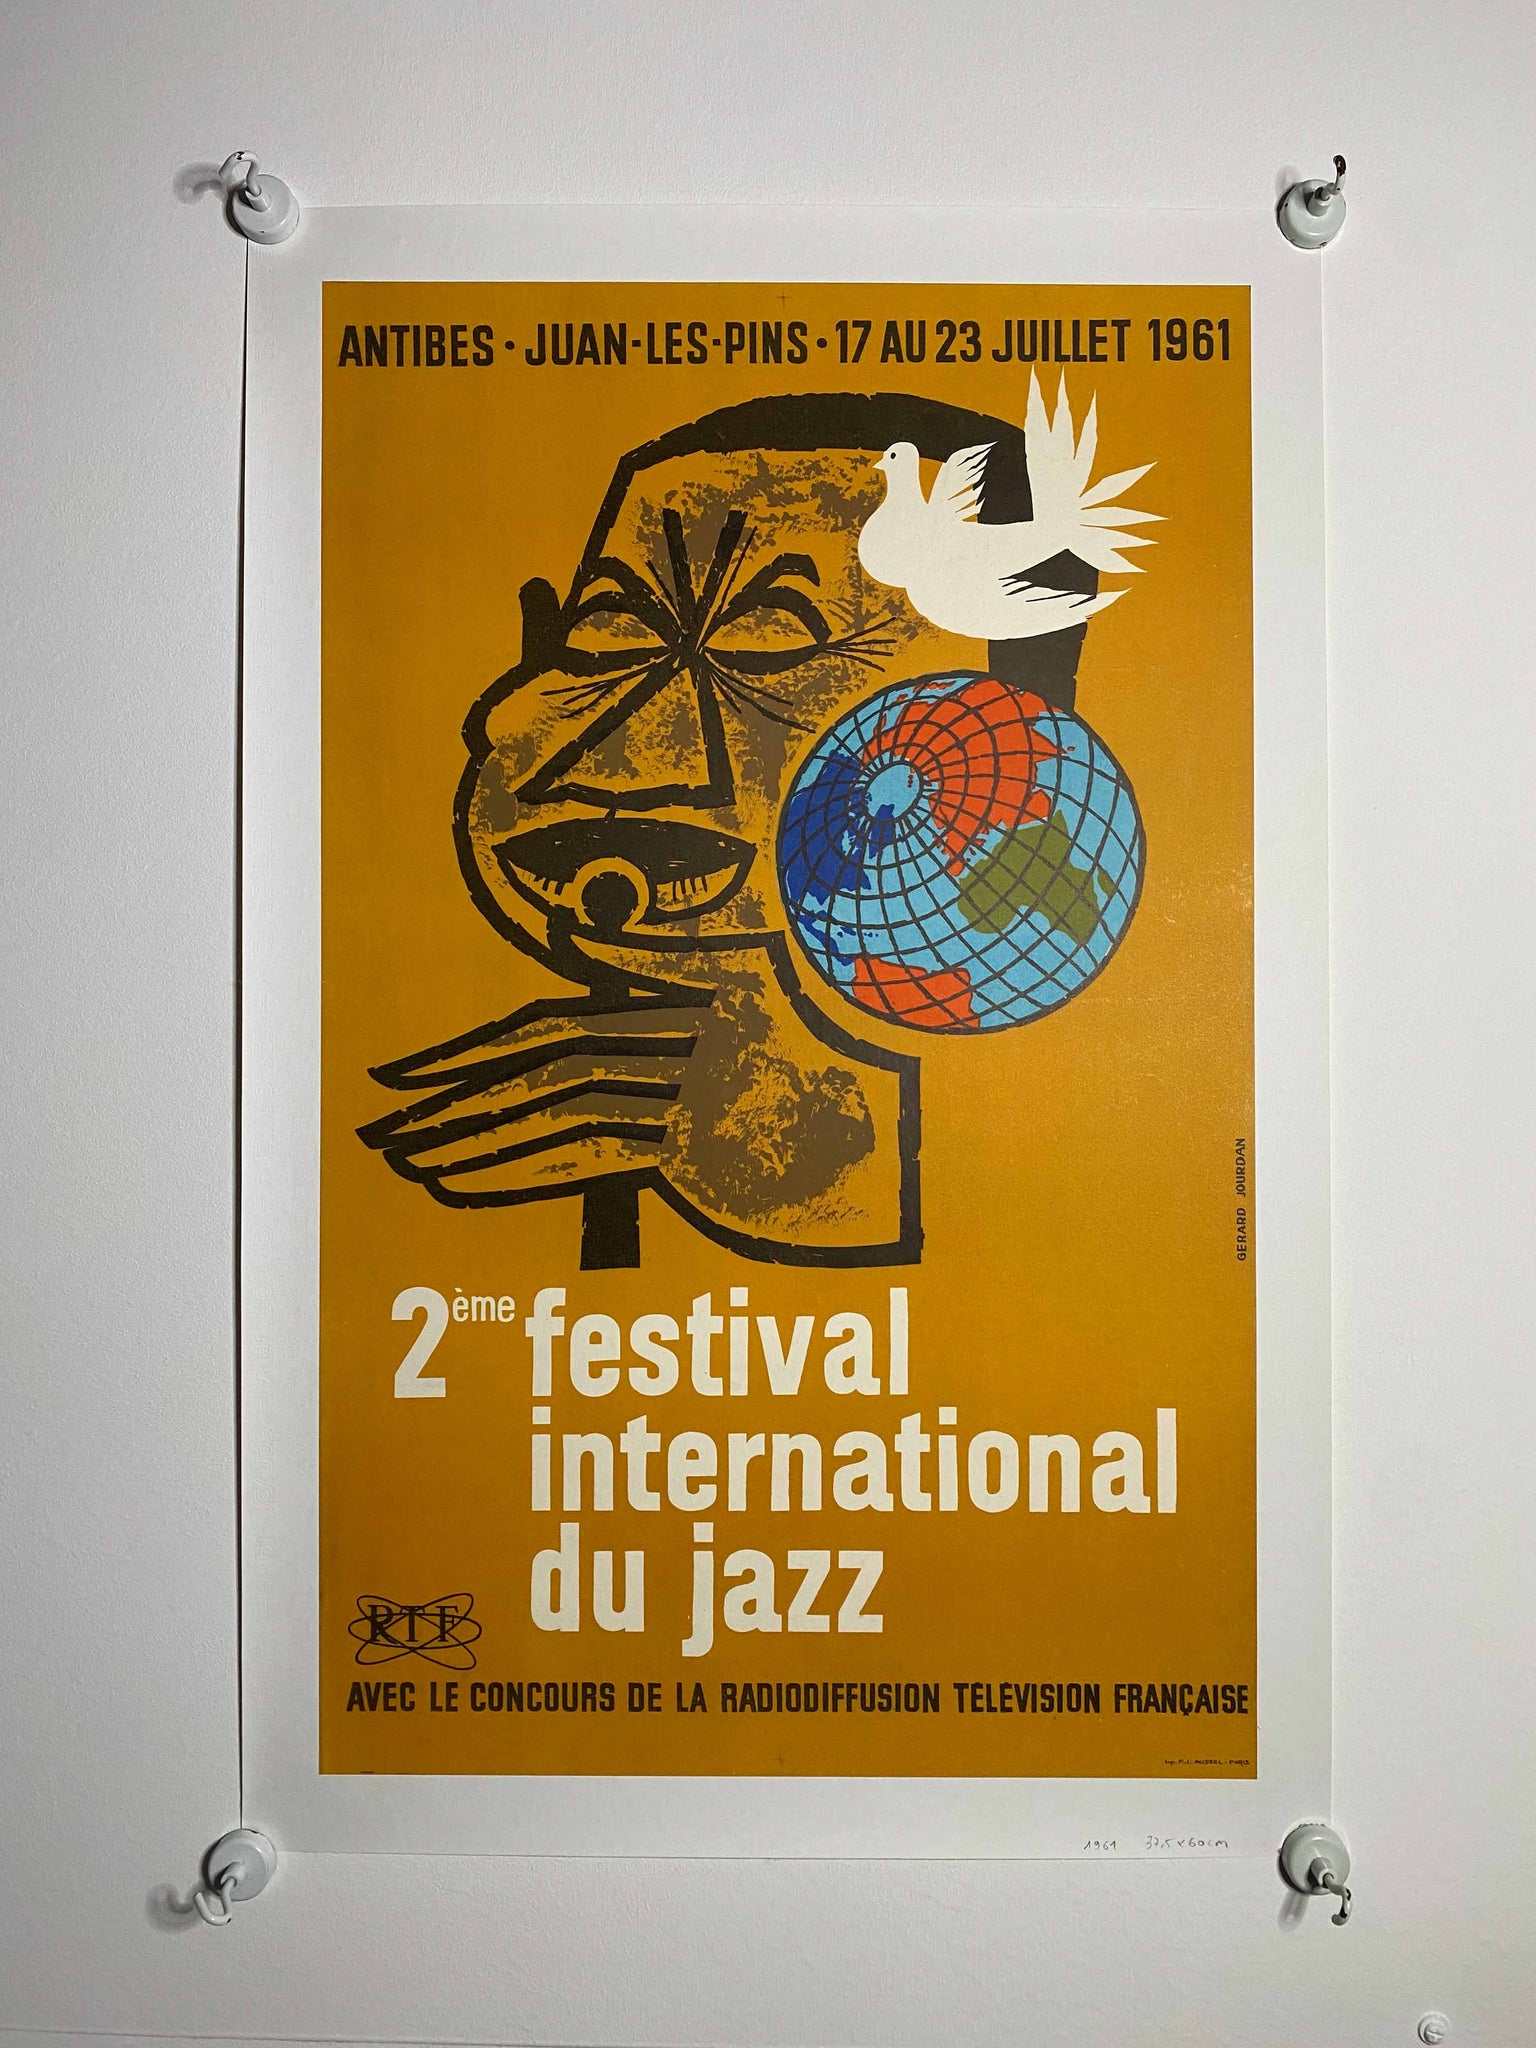 Affiche Originale 2eme Festival International du Jazz   par Gerard Jourdan, 1961